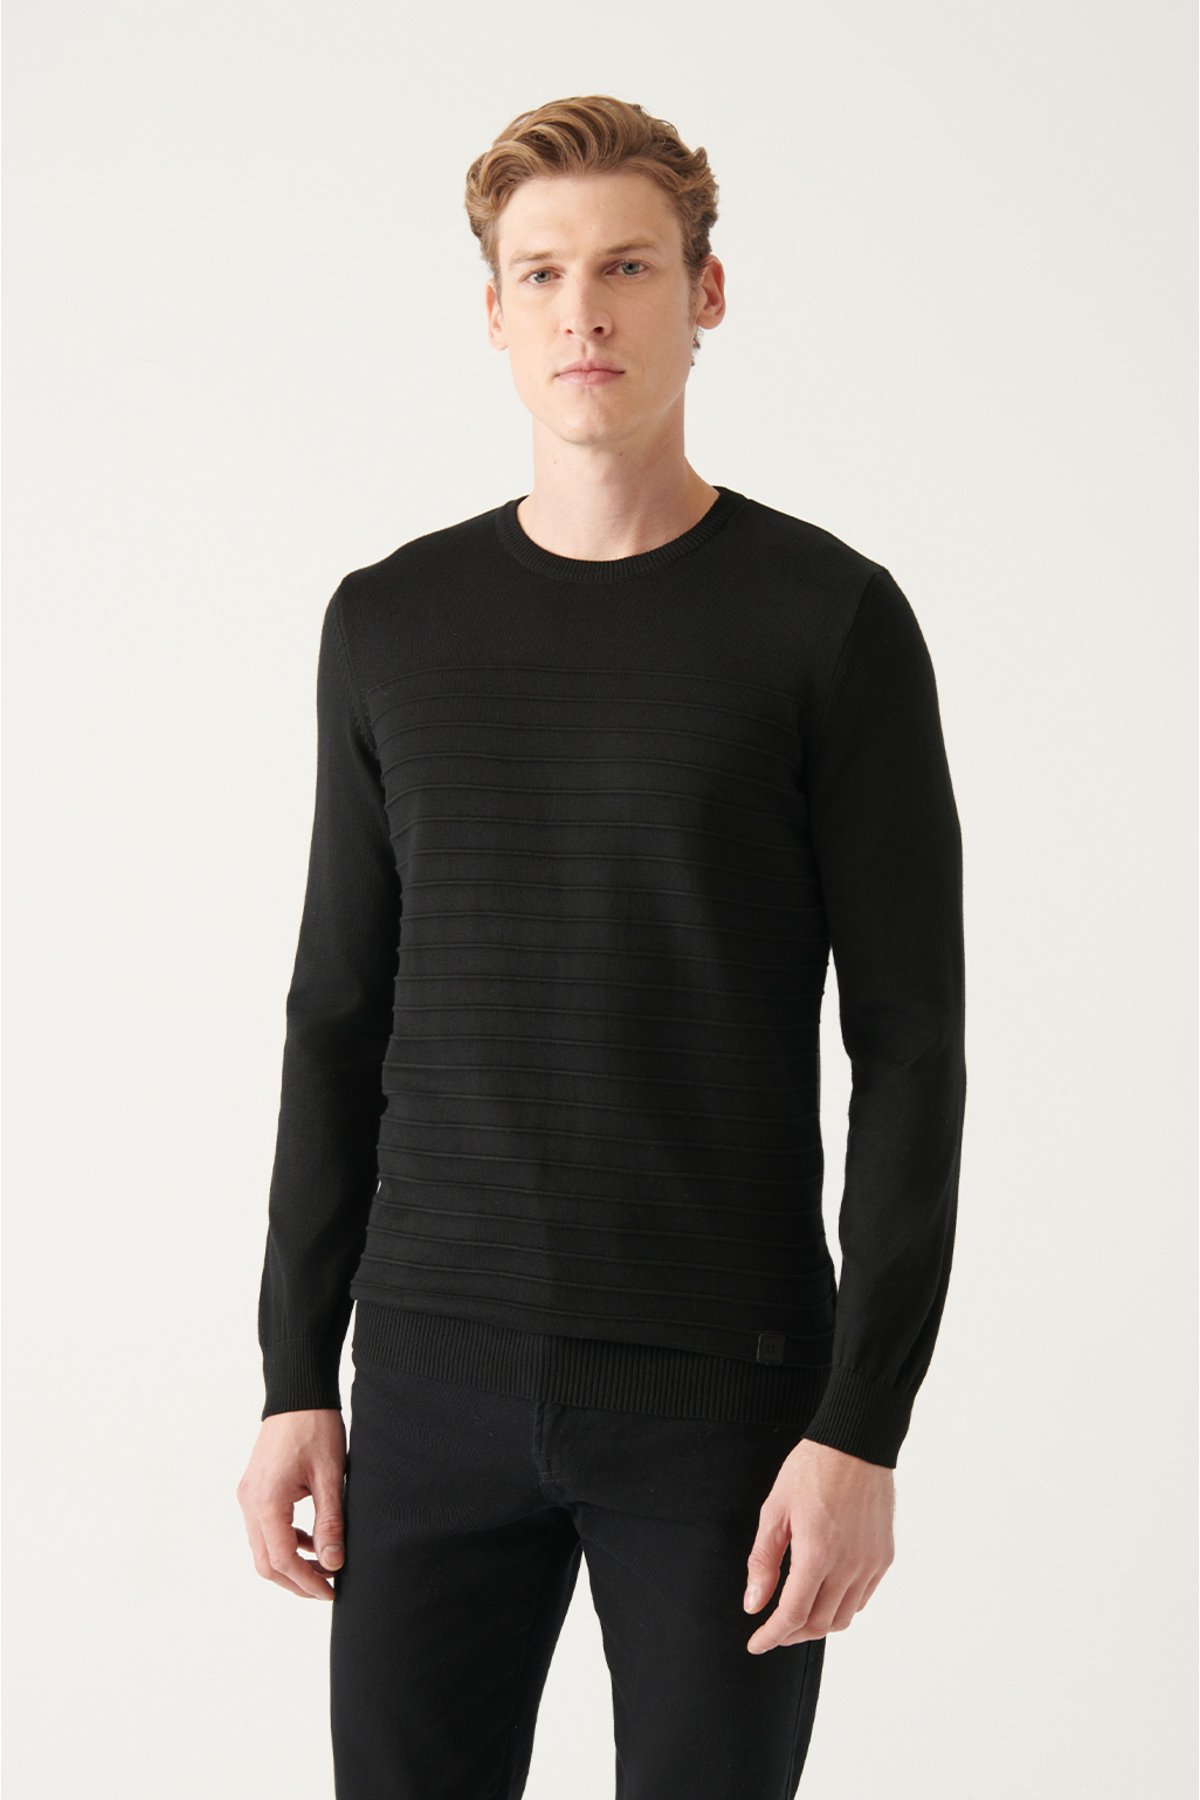 Avva Men's Black Crew Neck Knit Detailed Cotton Regular Fit Knitwear Sweater